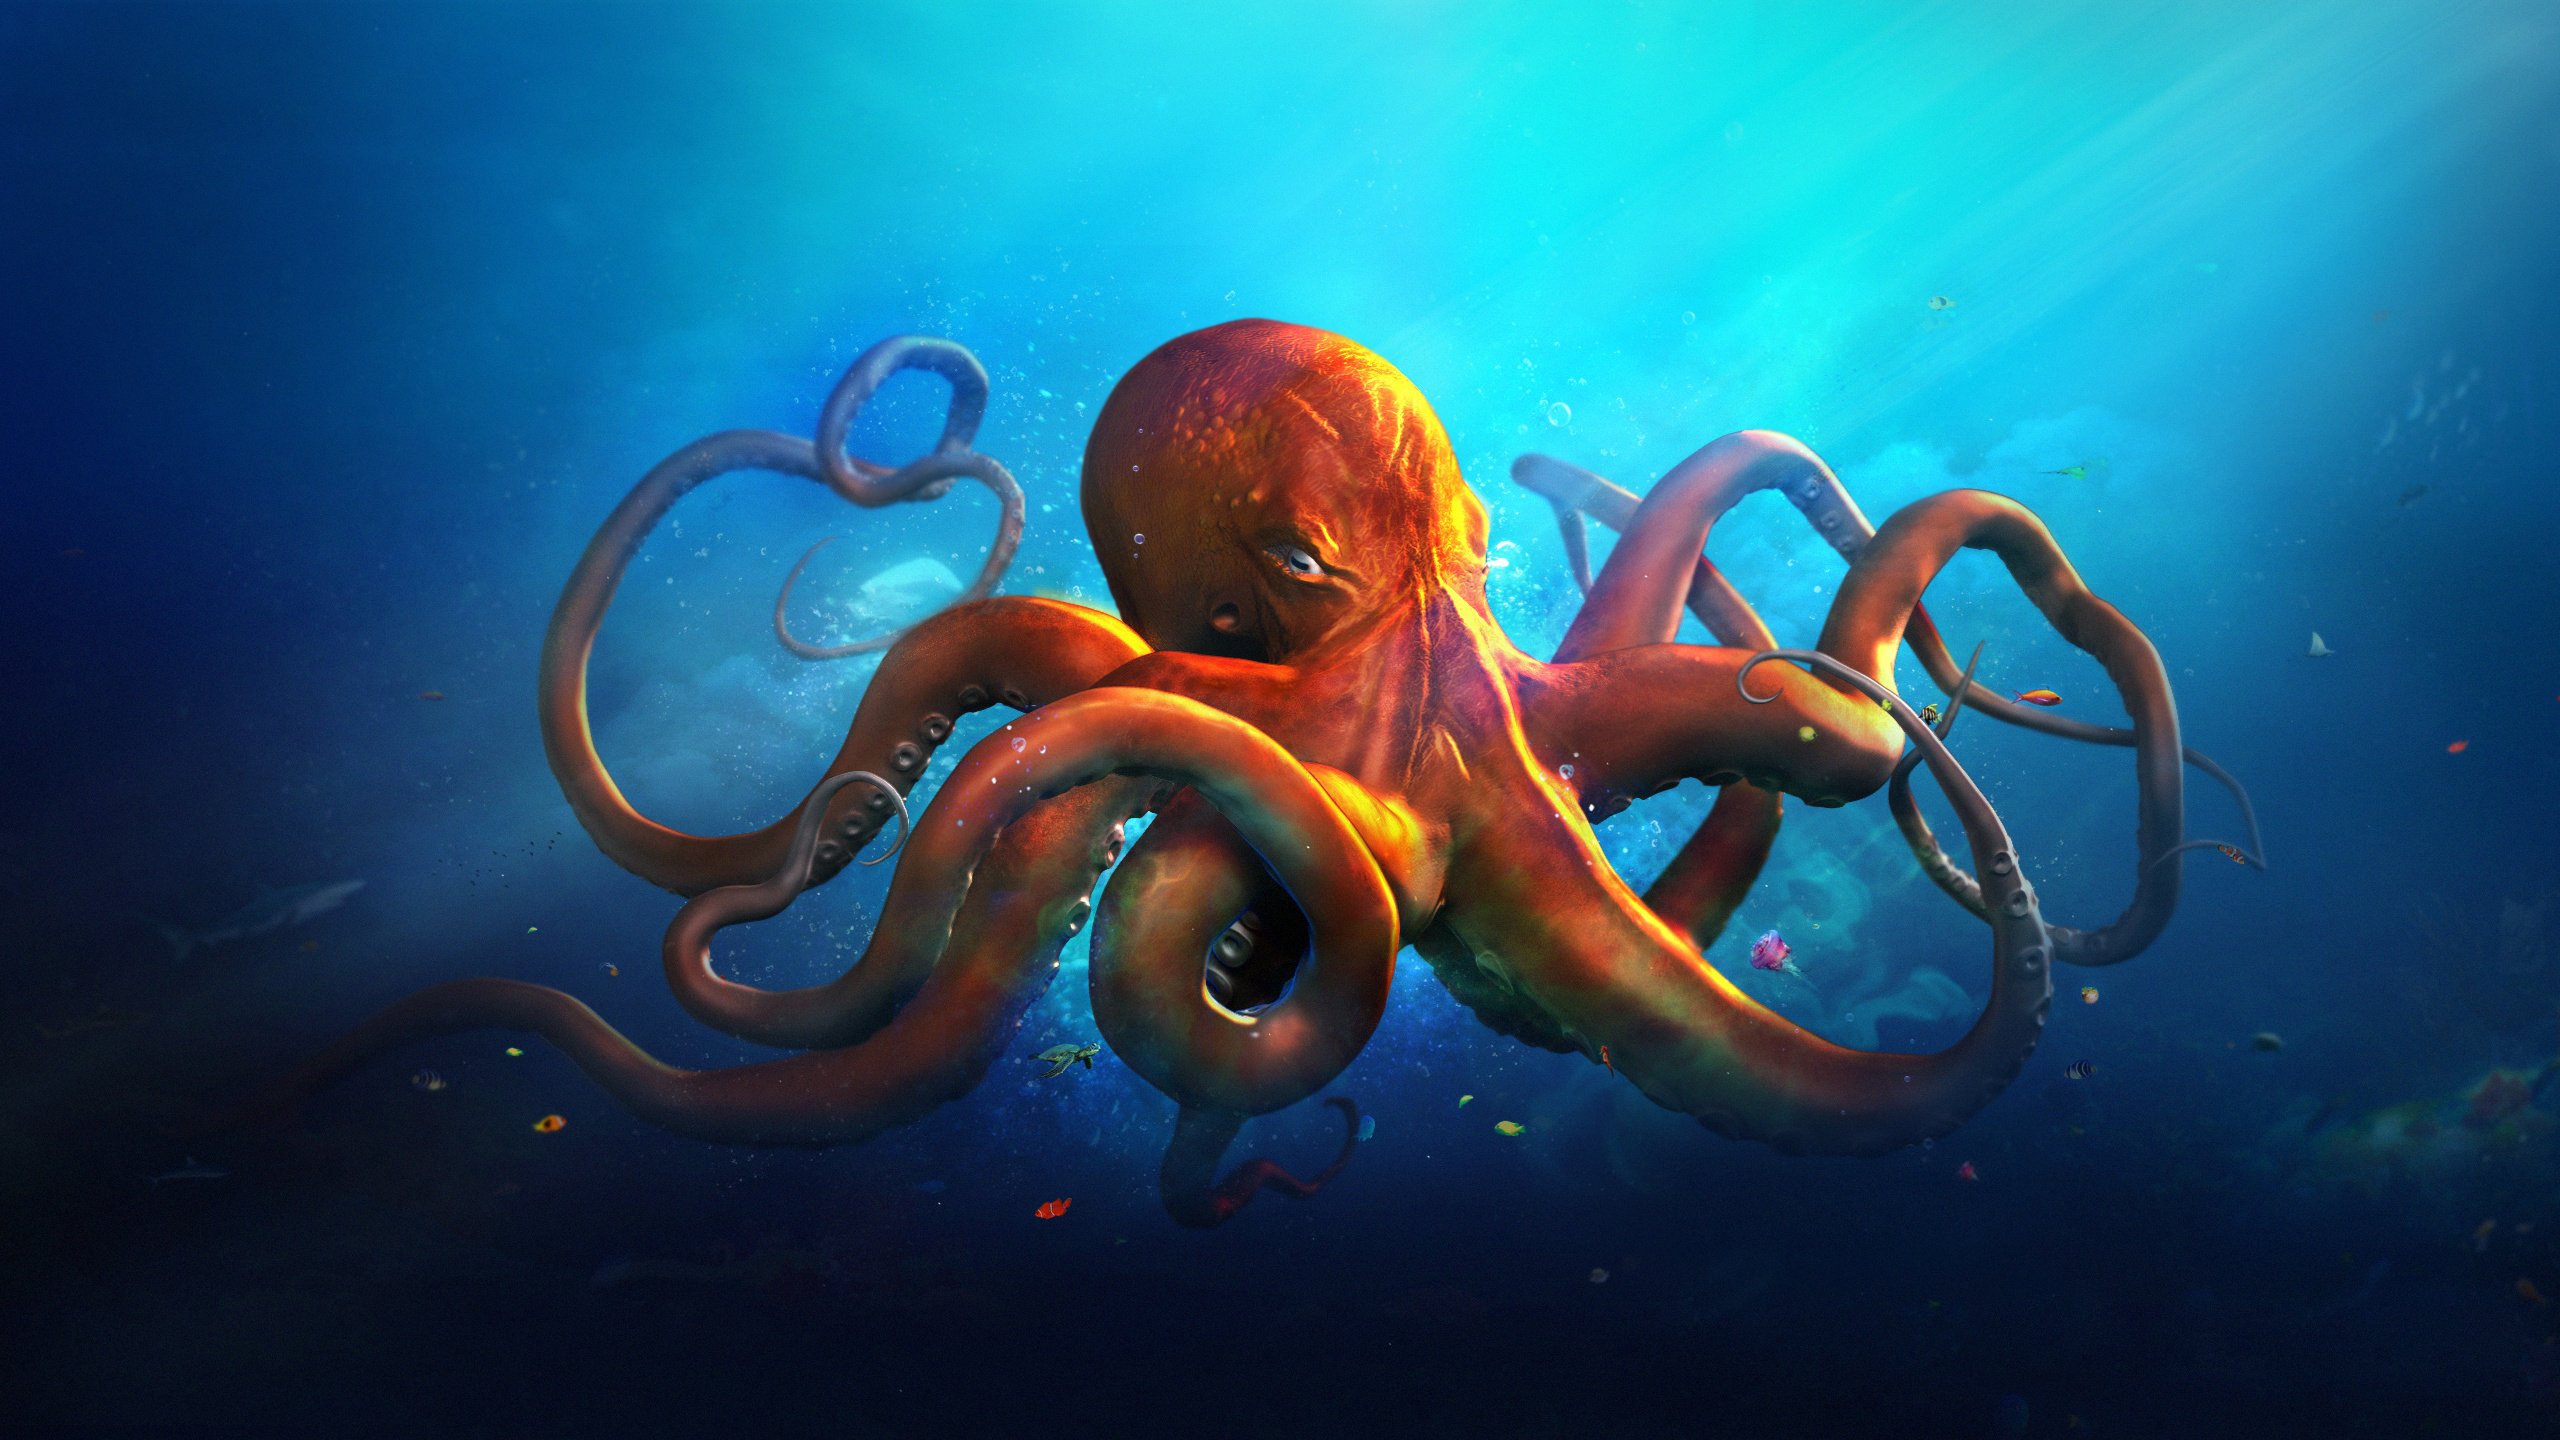  Animals octopus ocean sea fantasy artwork art wallpaper background